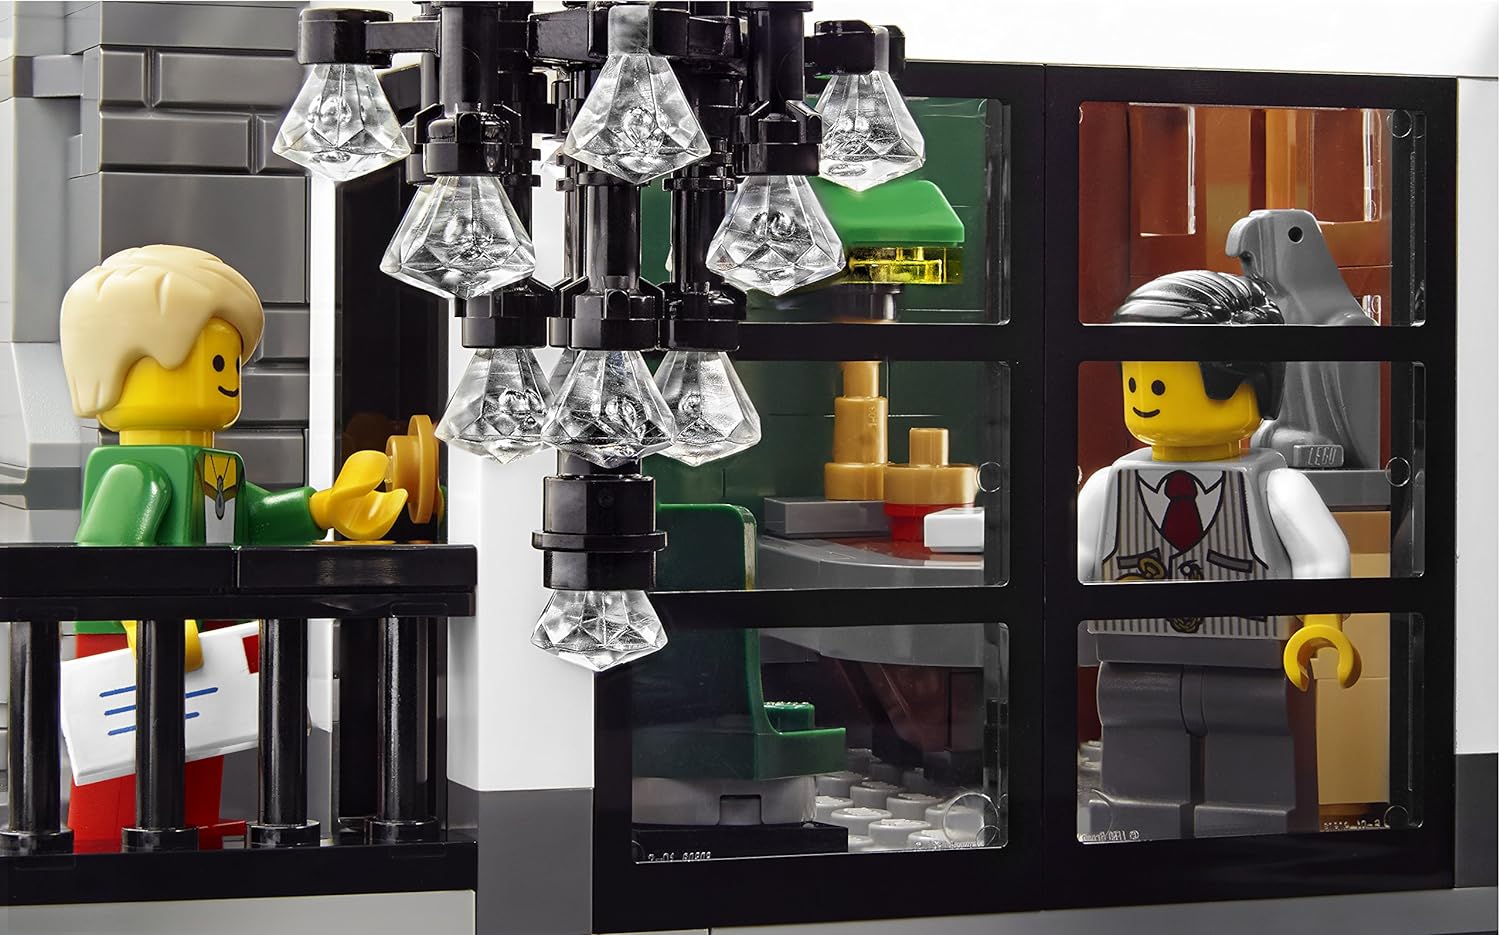 LEGO Creator Expert Brick Bank 10251 Construction Set